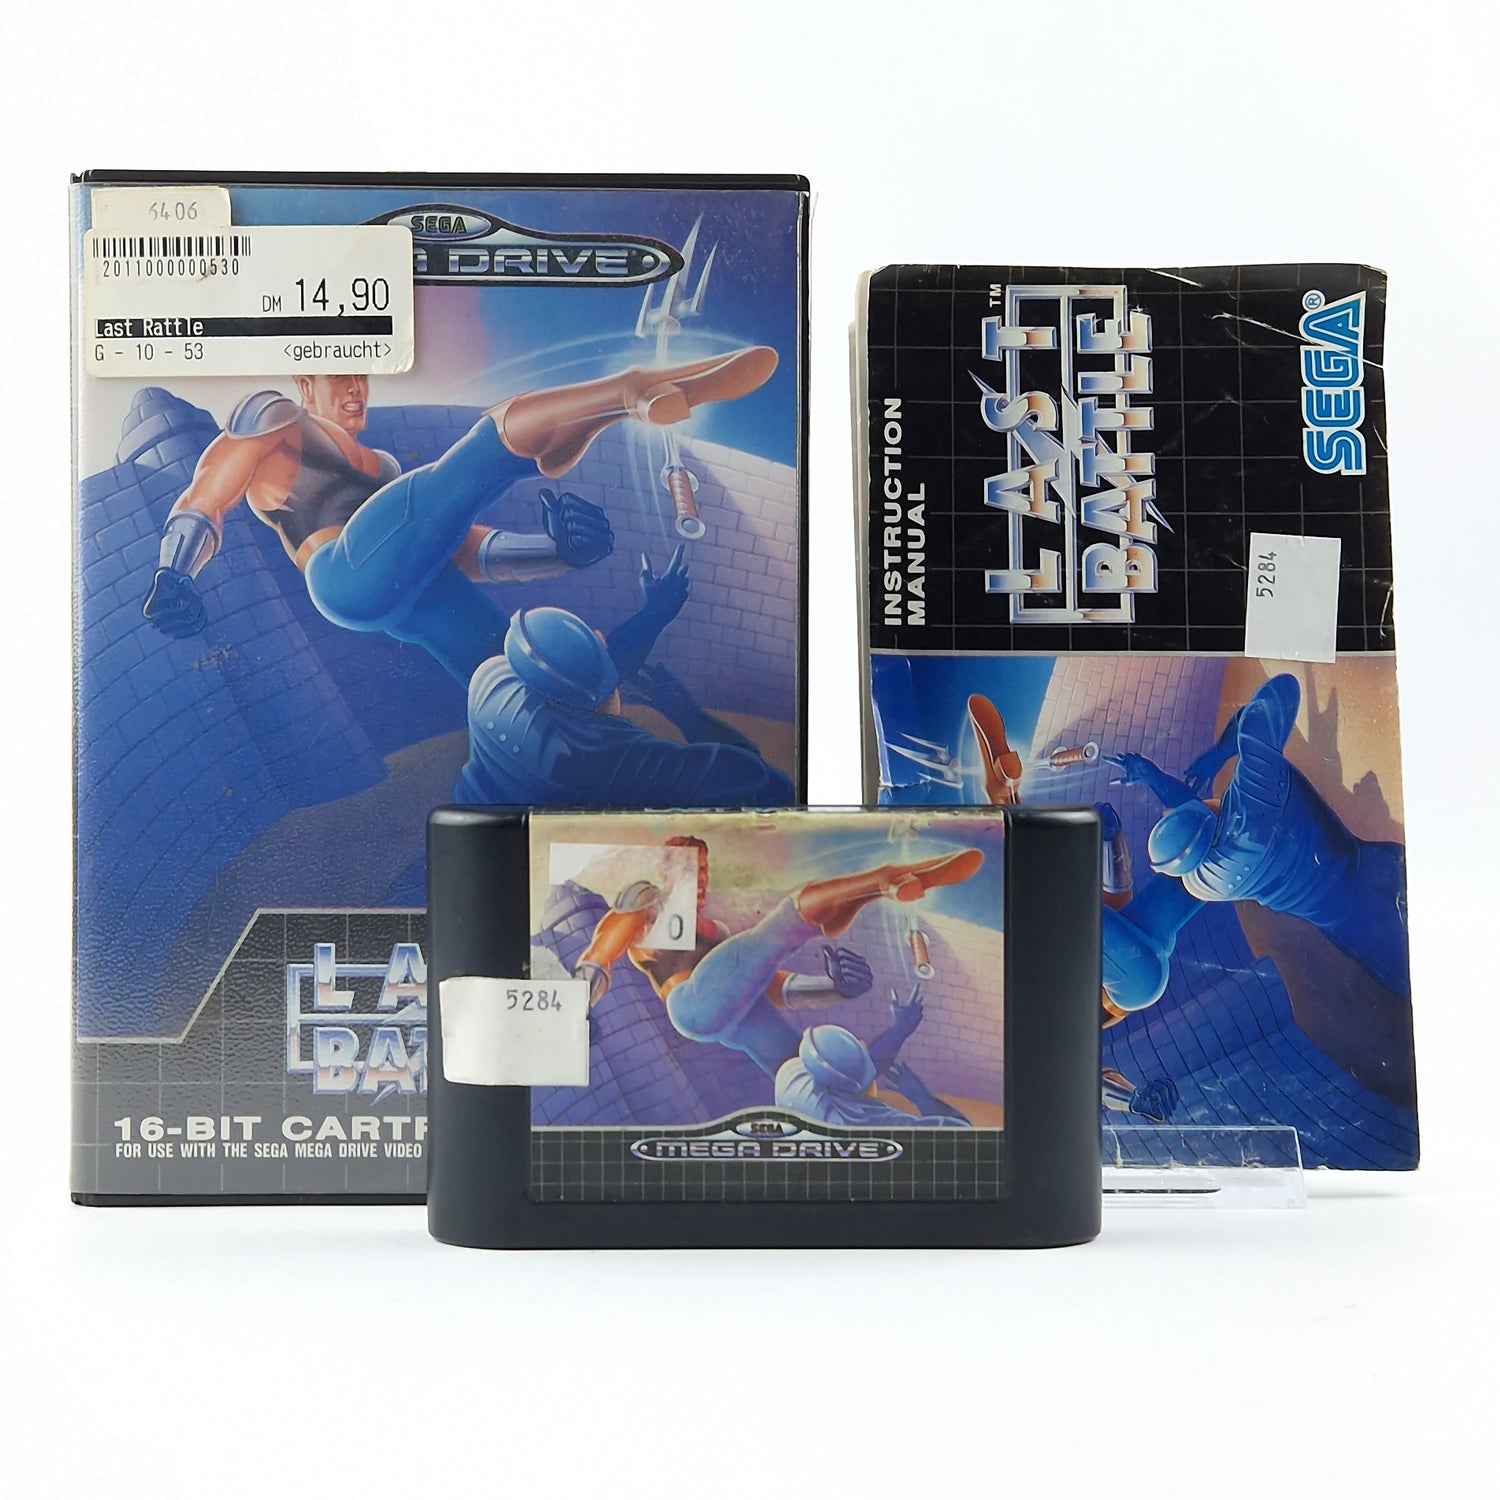 Sega Mega Drive Game: Last Battle - Module Instructions OVP cib / MD Pal Game